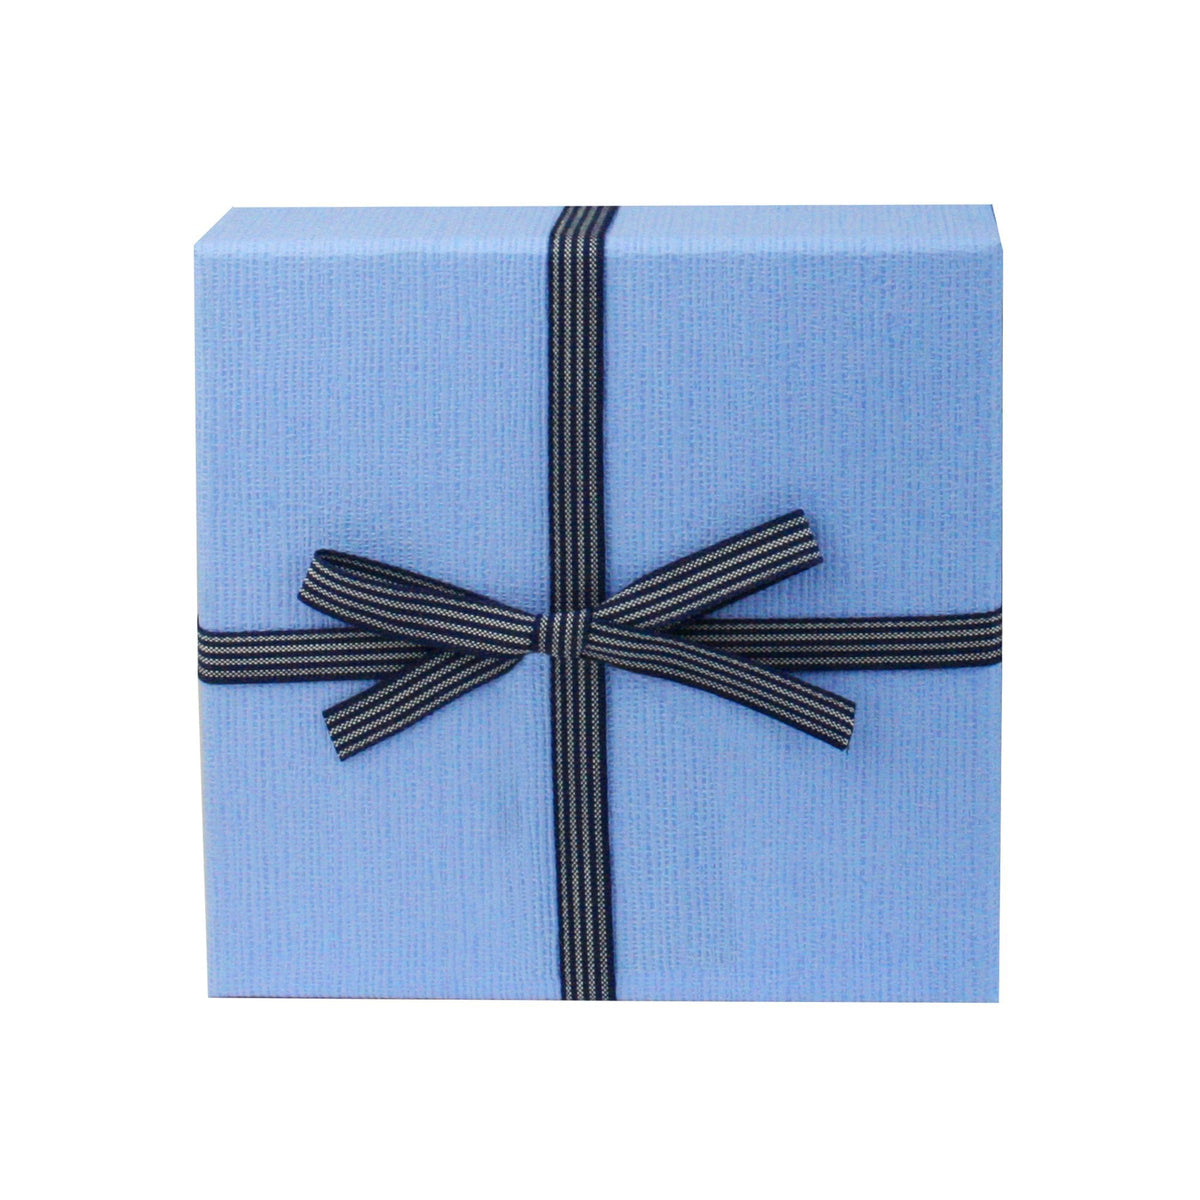 Single Dark Blue Gift Box with Striped Bow Ribbon